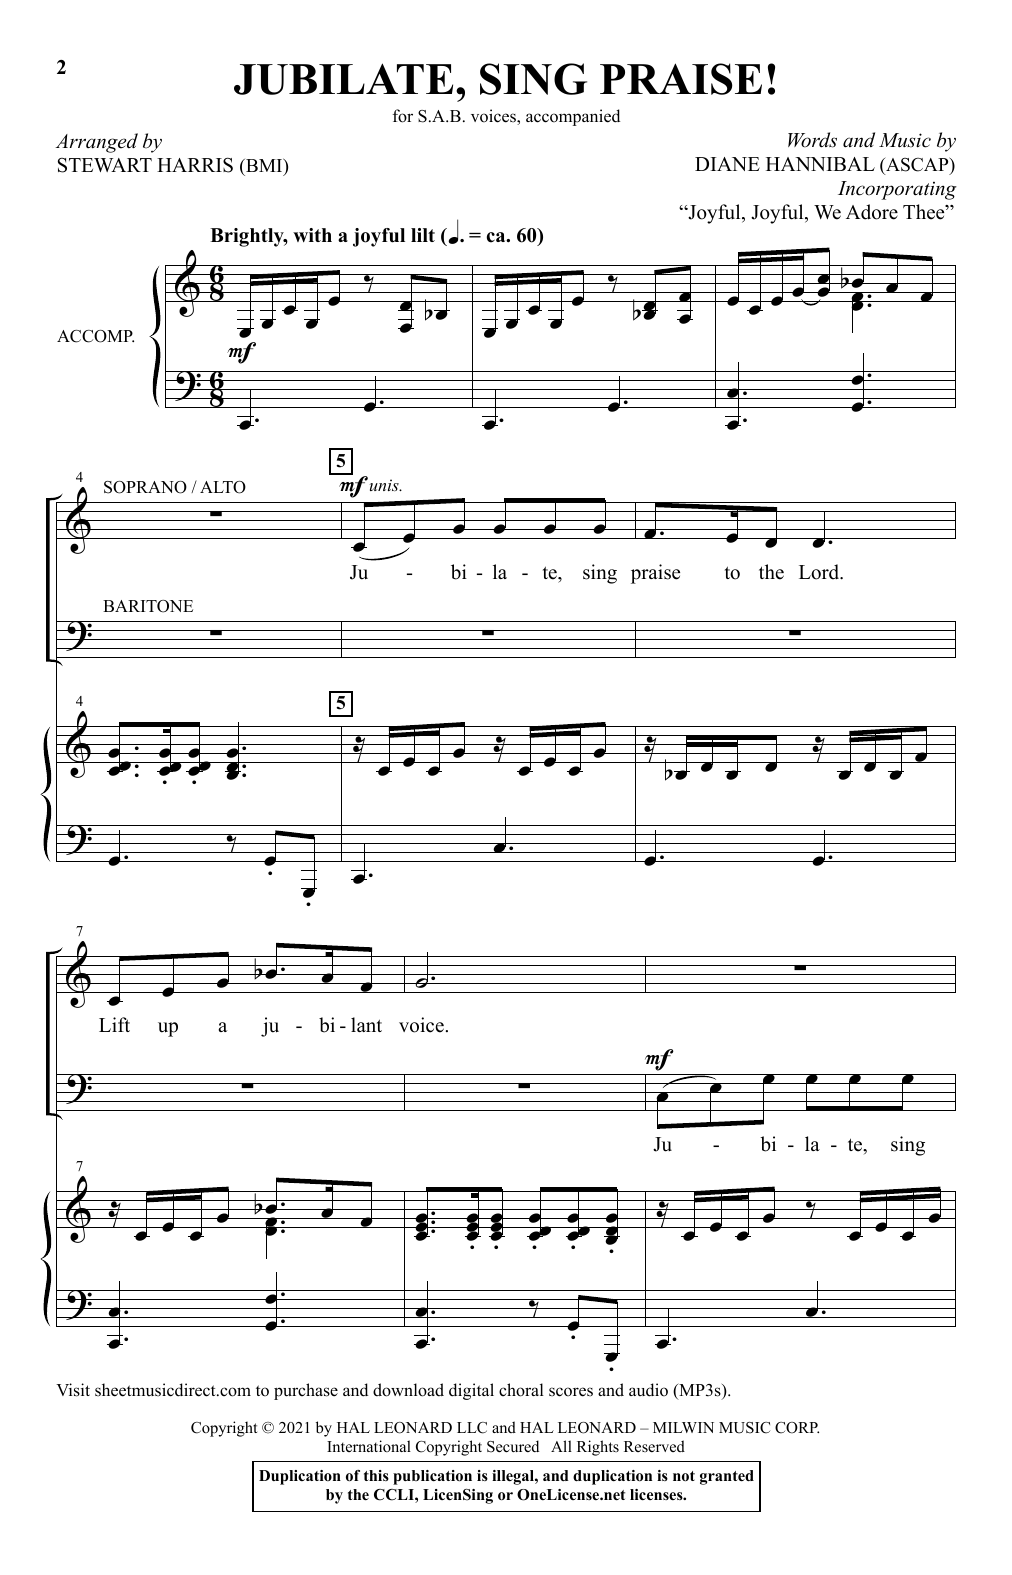 Diane Hannibal Jubilate, Sing Praise! (arr. Stewart Harris) Sheet Music Notes & Chords for SAB Choir - Download or Print PDF